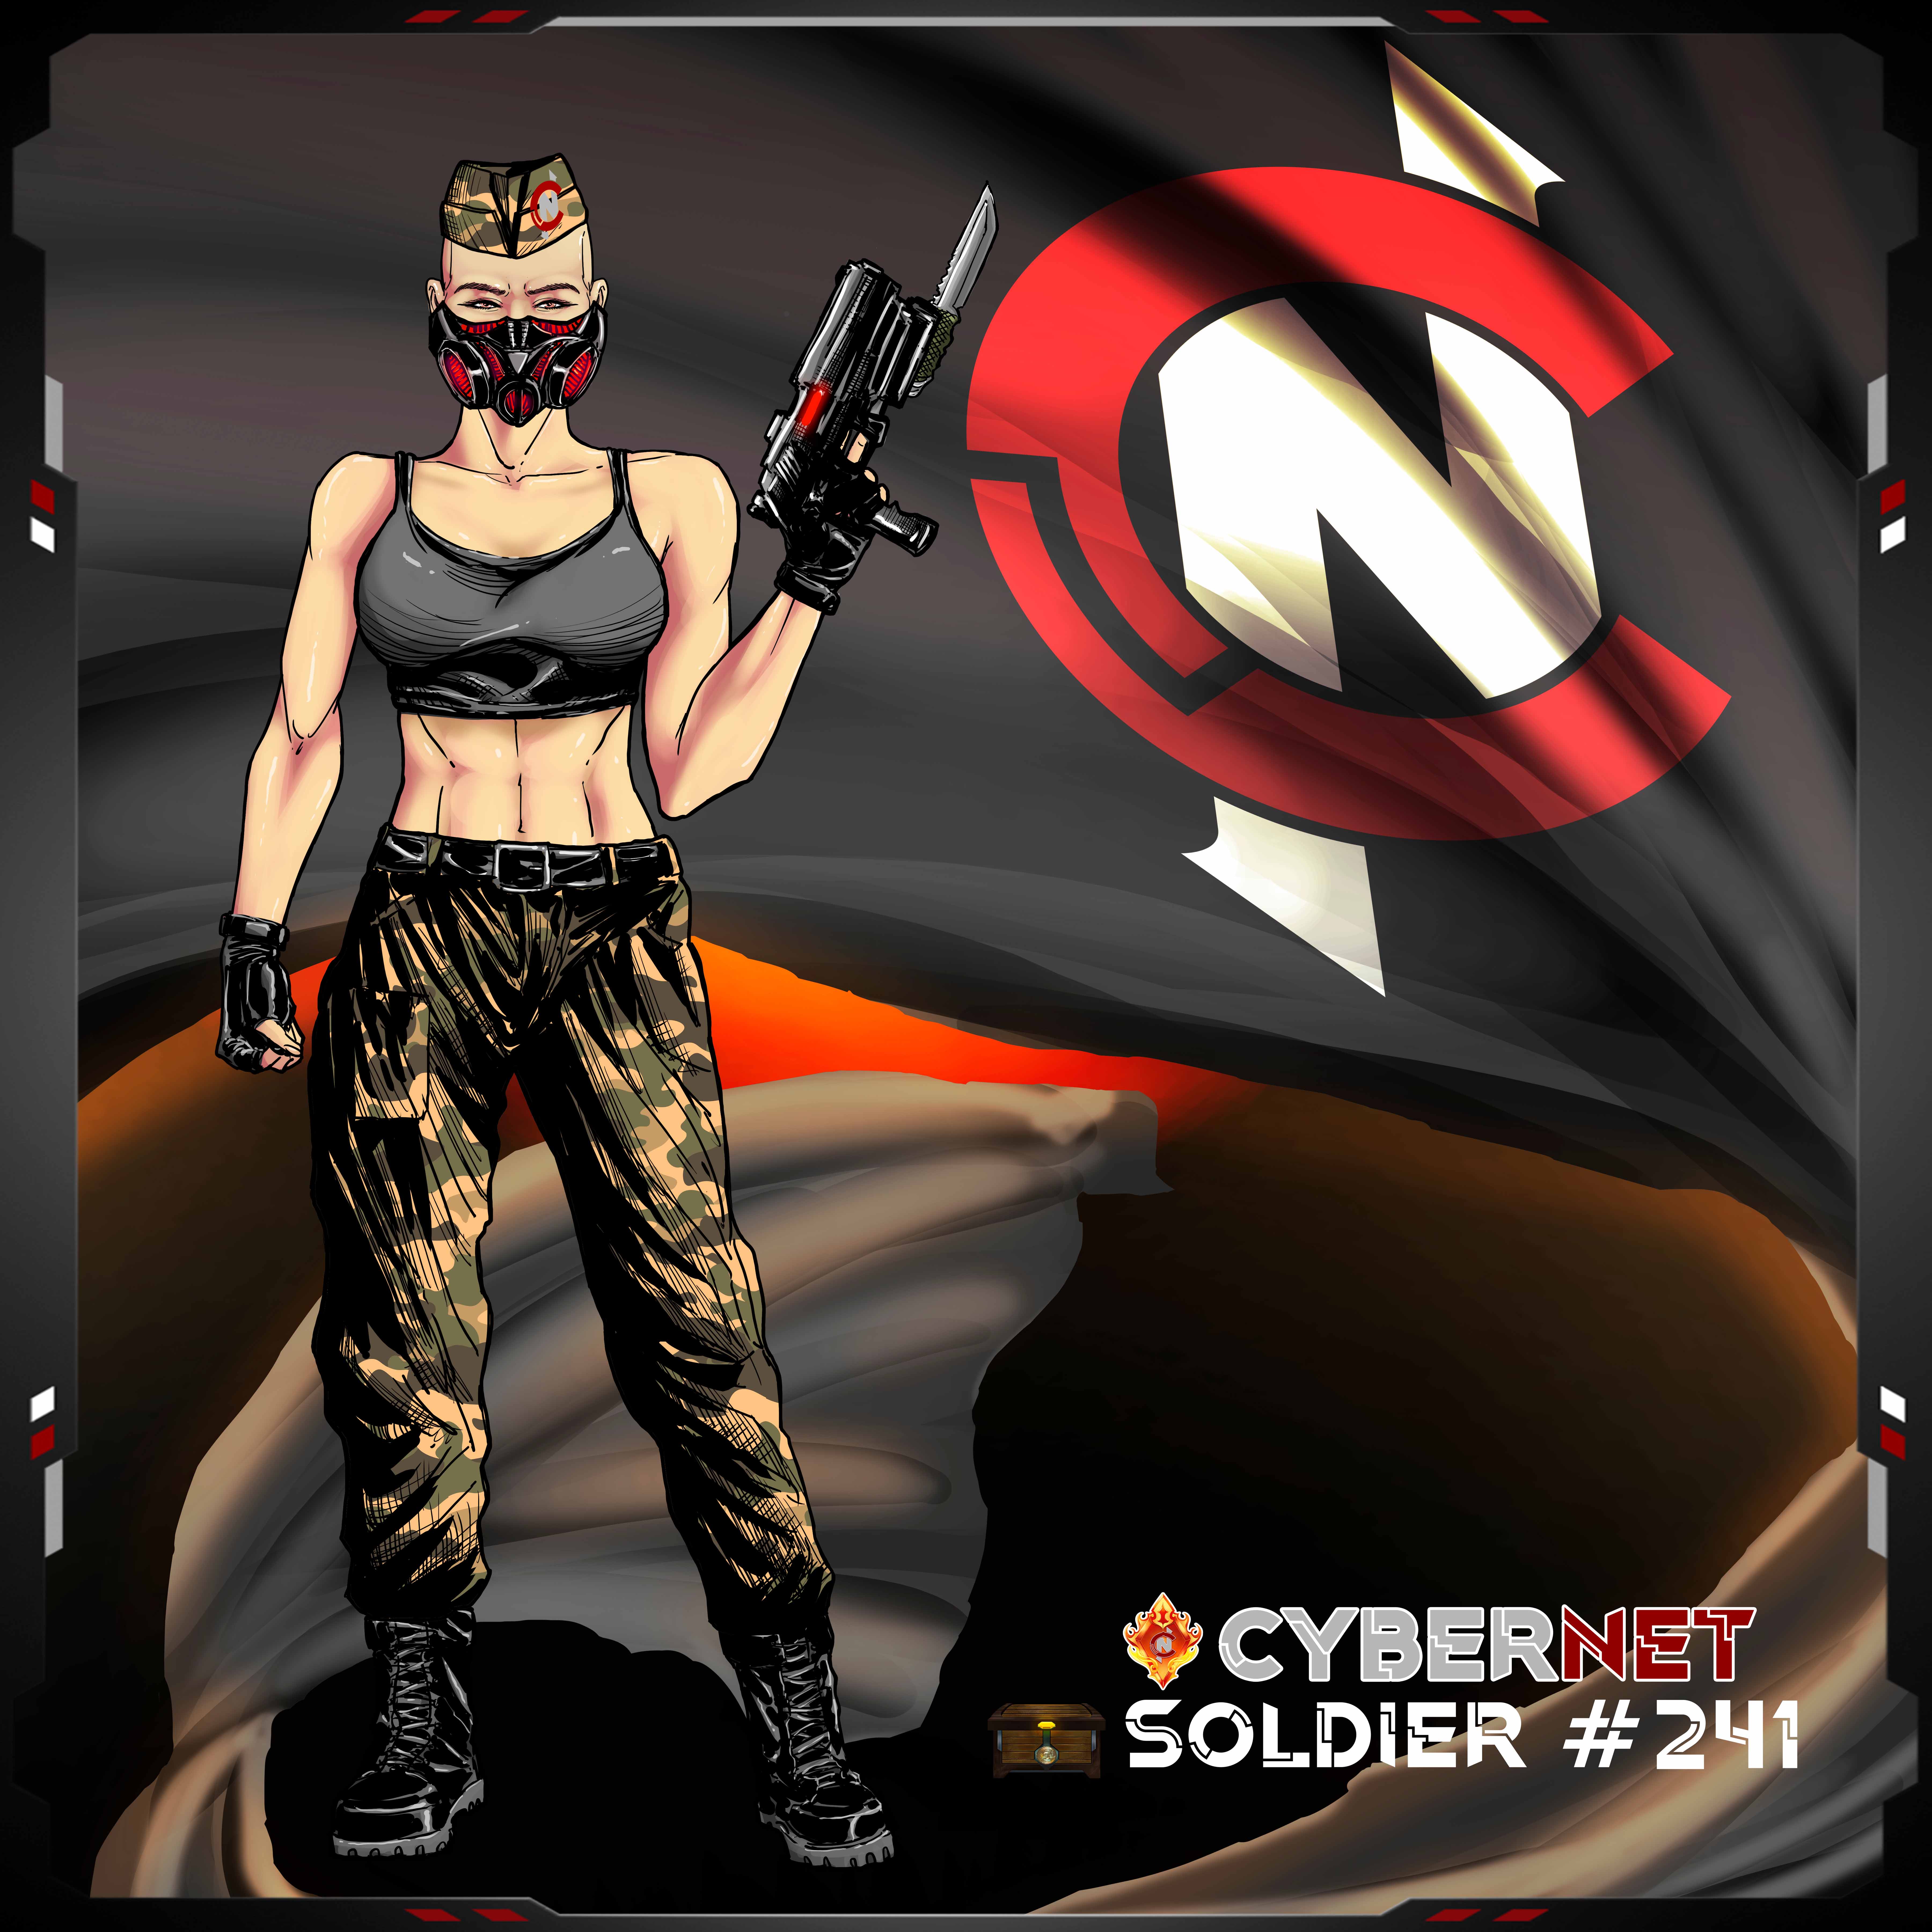 CN RF Soldier #241